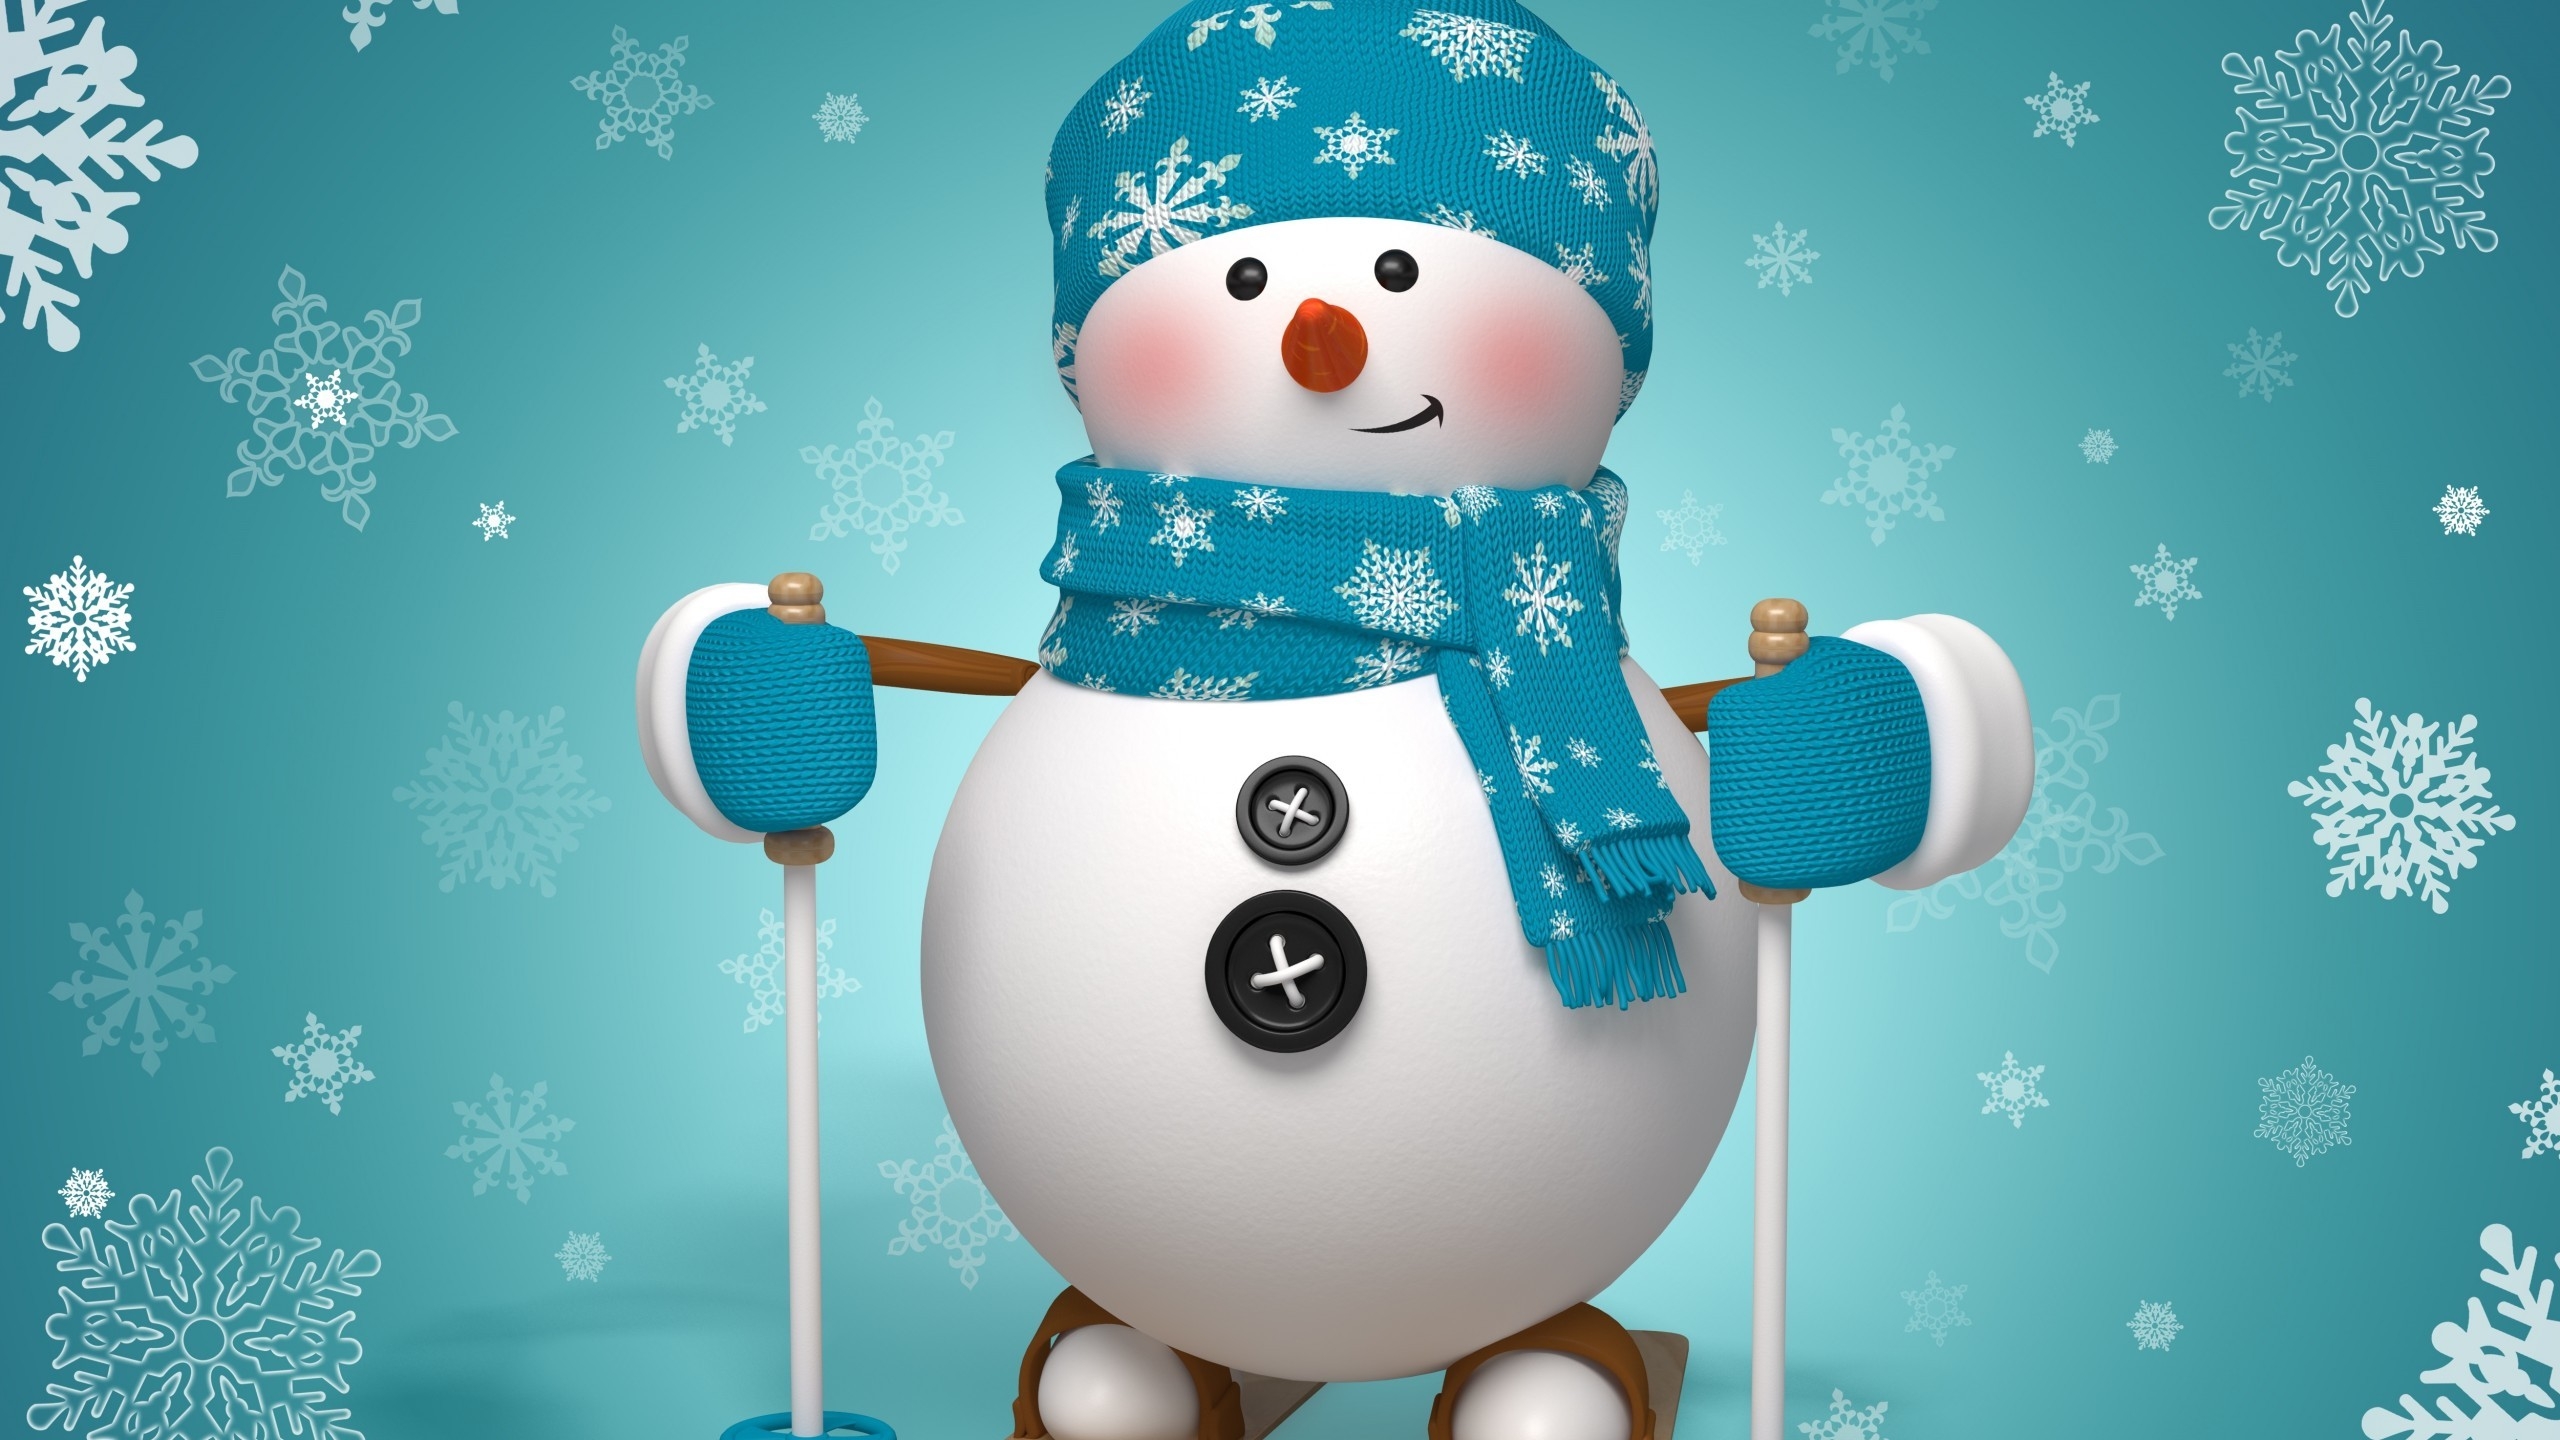 Snowman Ready to Ski for 2560x1440 HDTV resolution